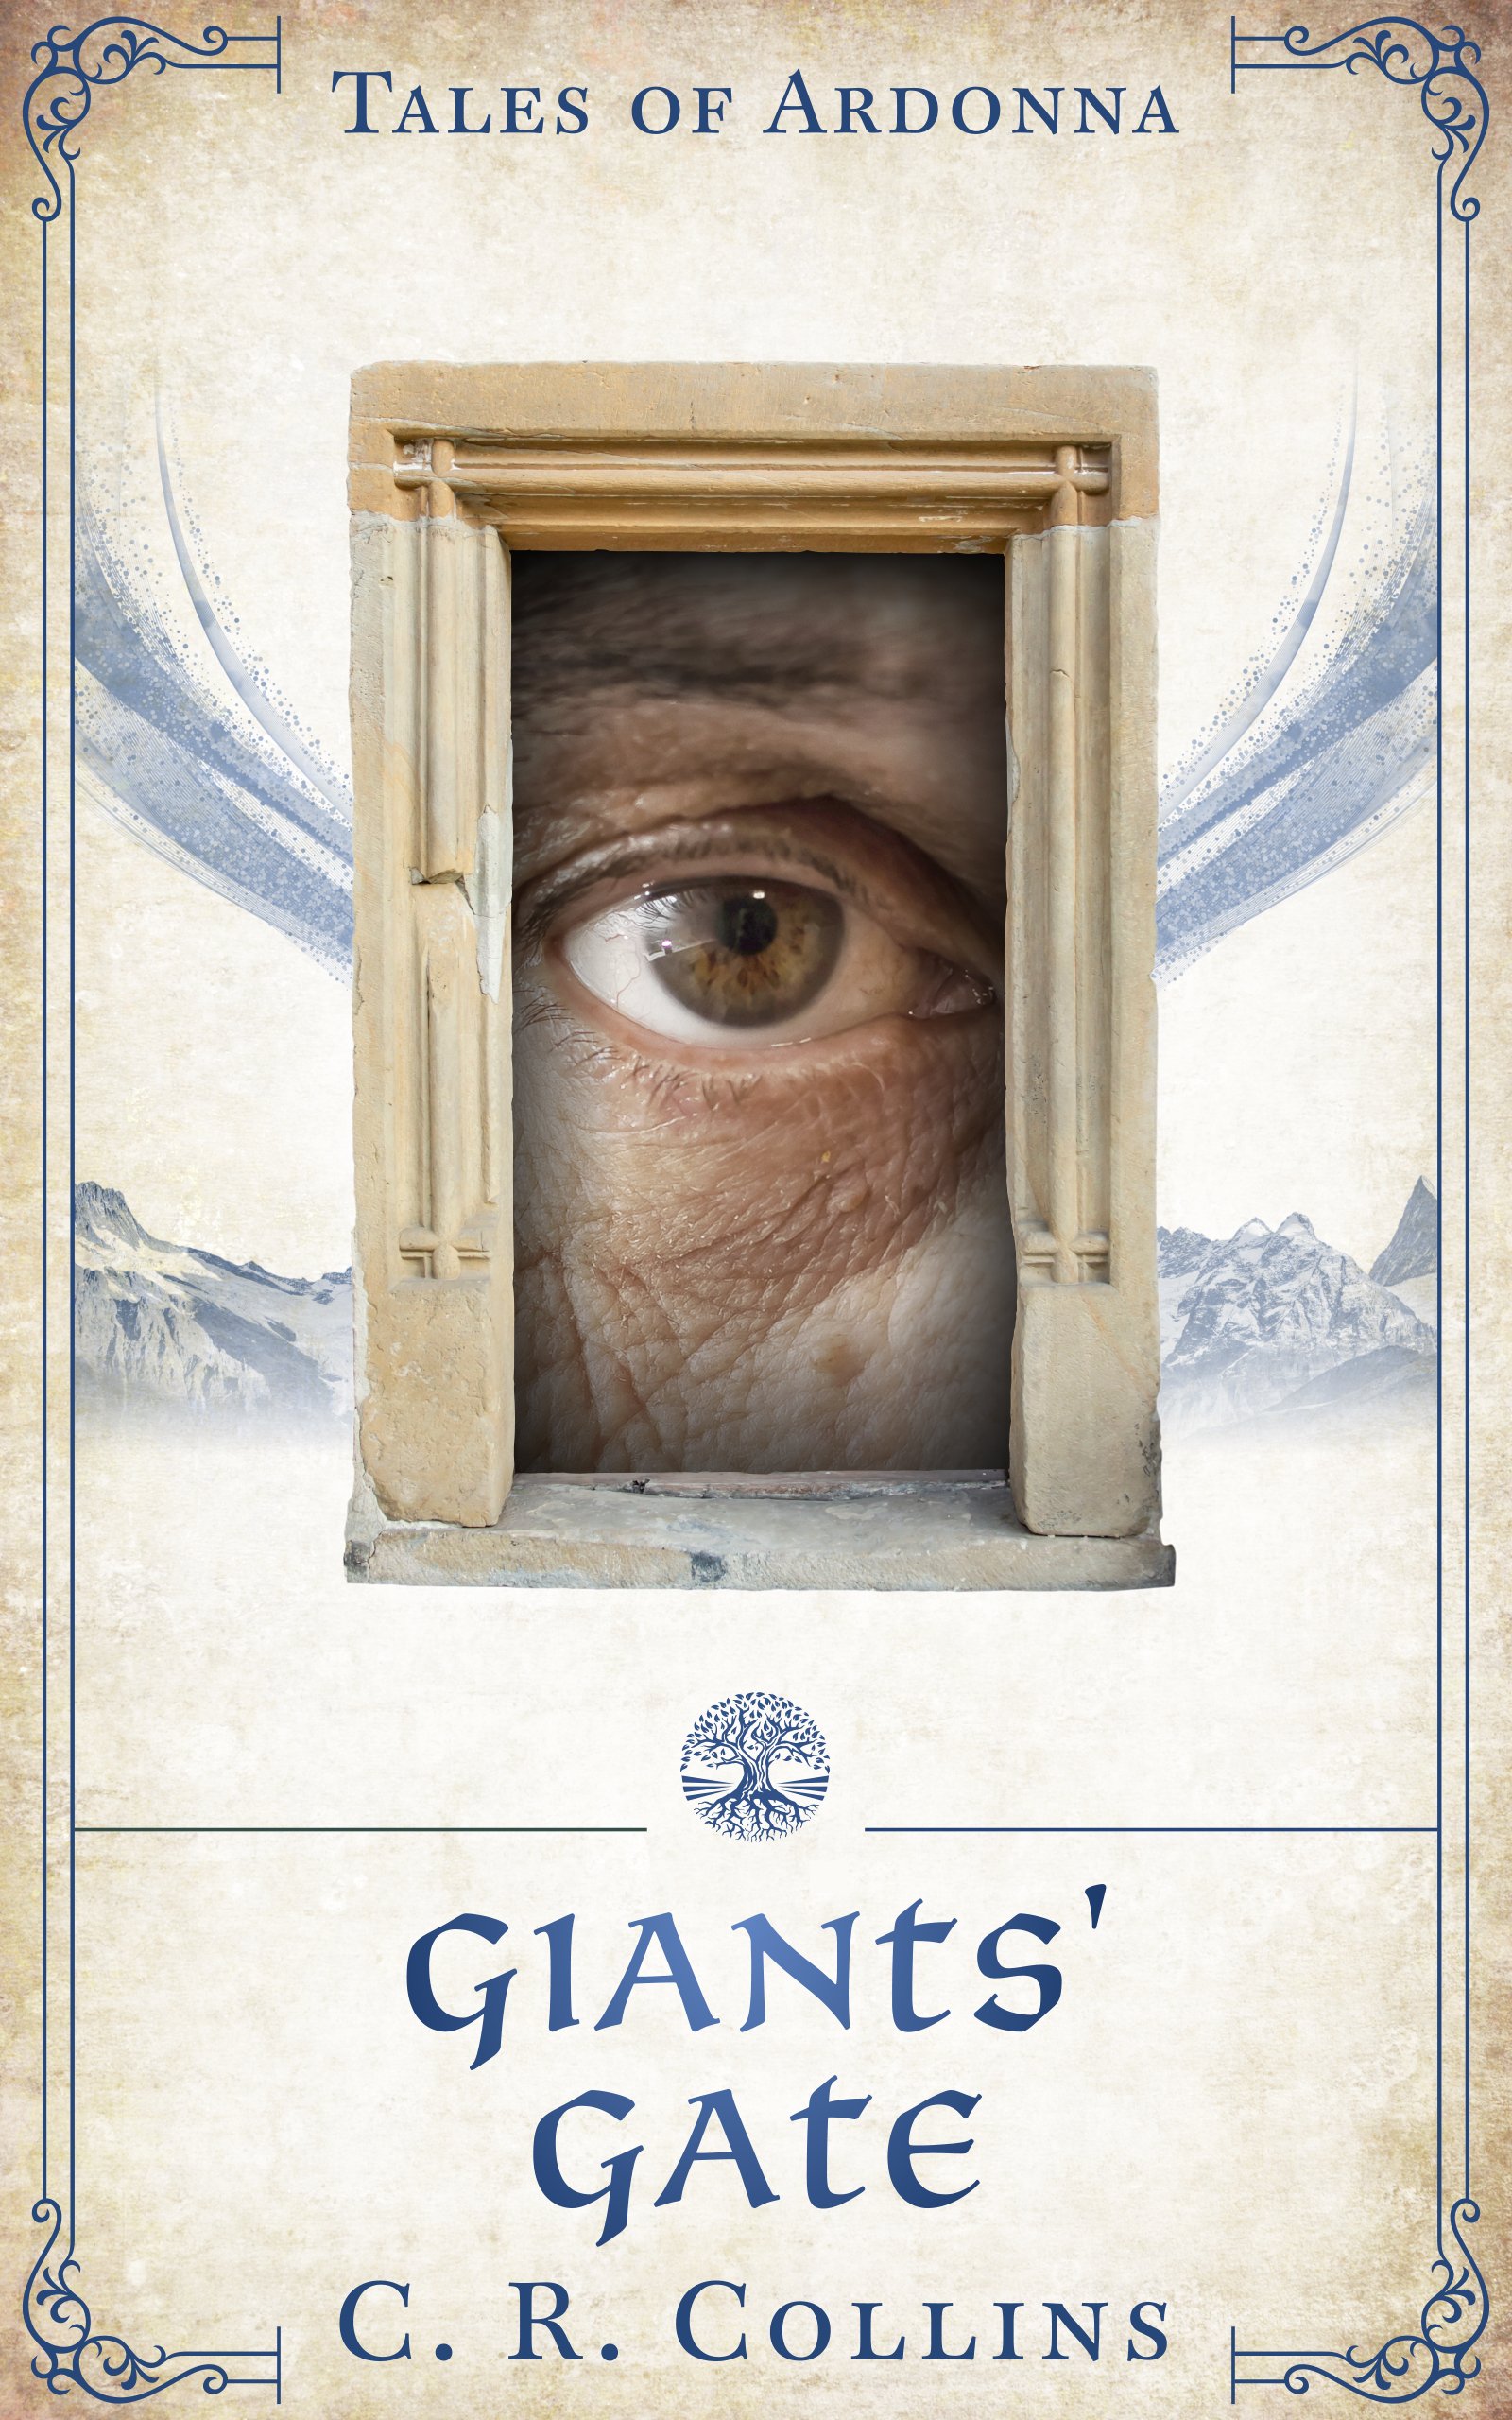 Giants Gate - Kindle - High Resolution.jpg